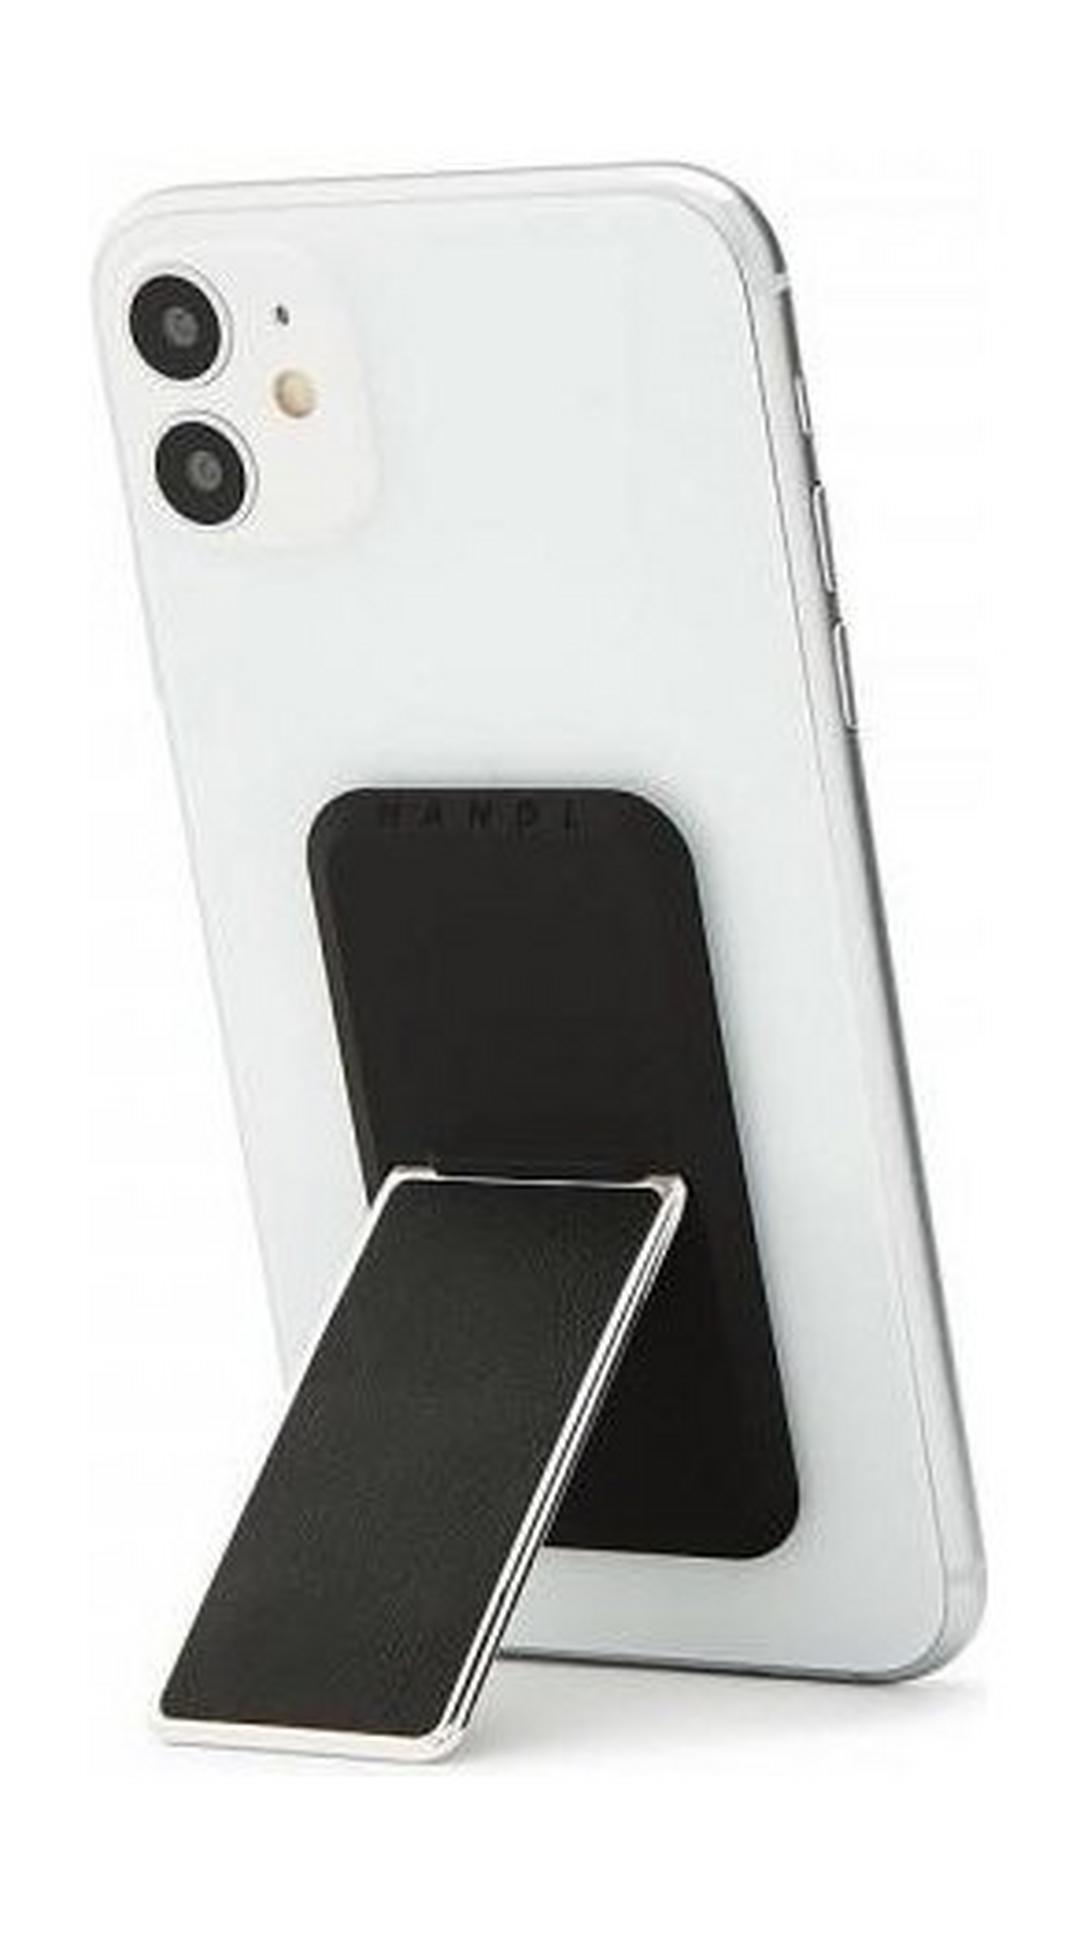 HANDLstick Smooth Leather Smartphone Holder- Black/Chrome